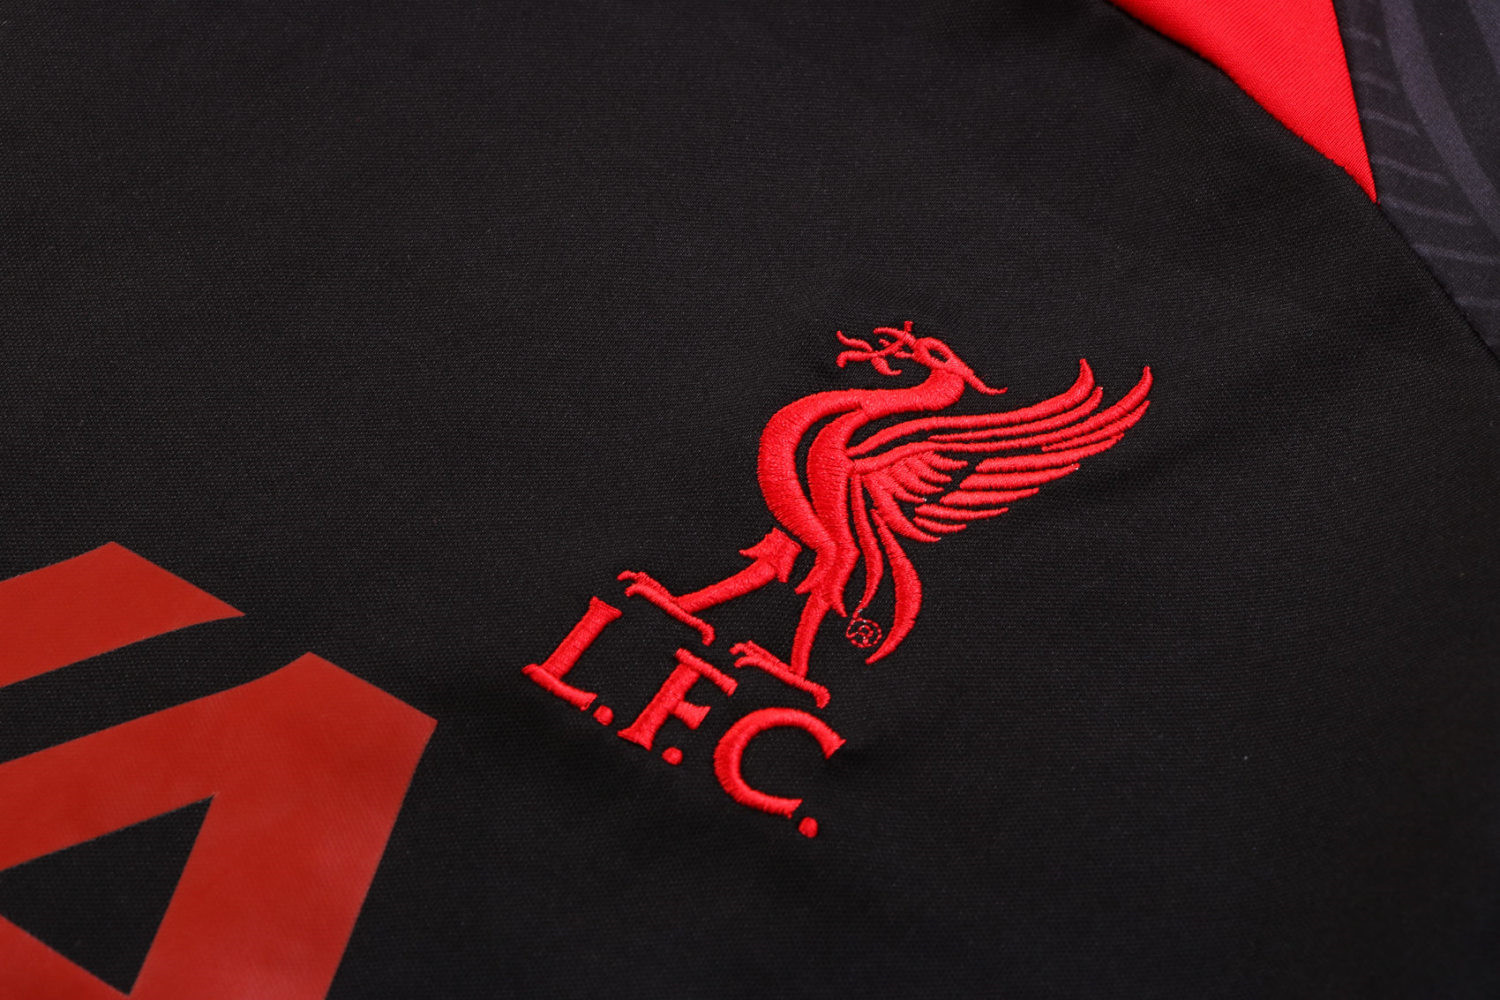 Liverpool 2022-23 Black Soccer Jersey + Short Replica Mens